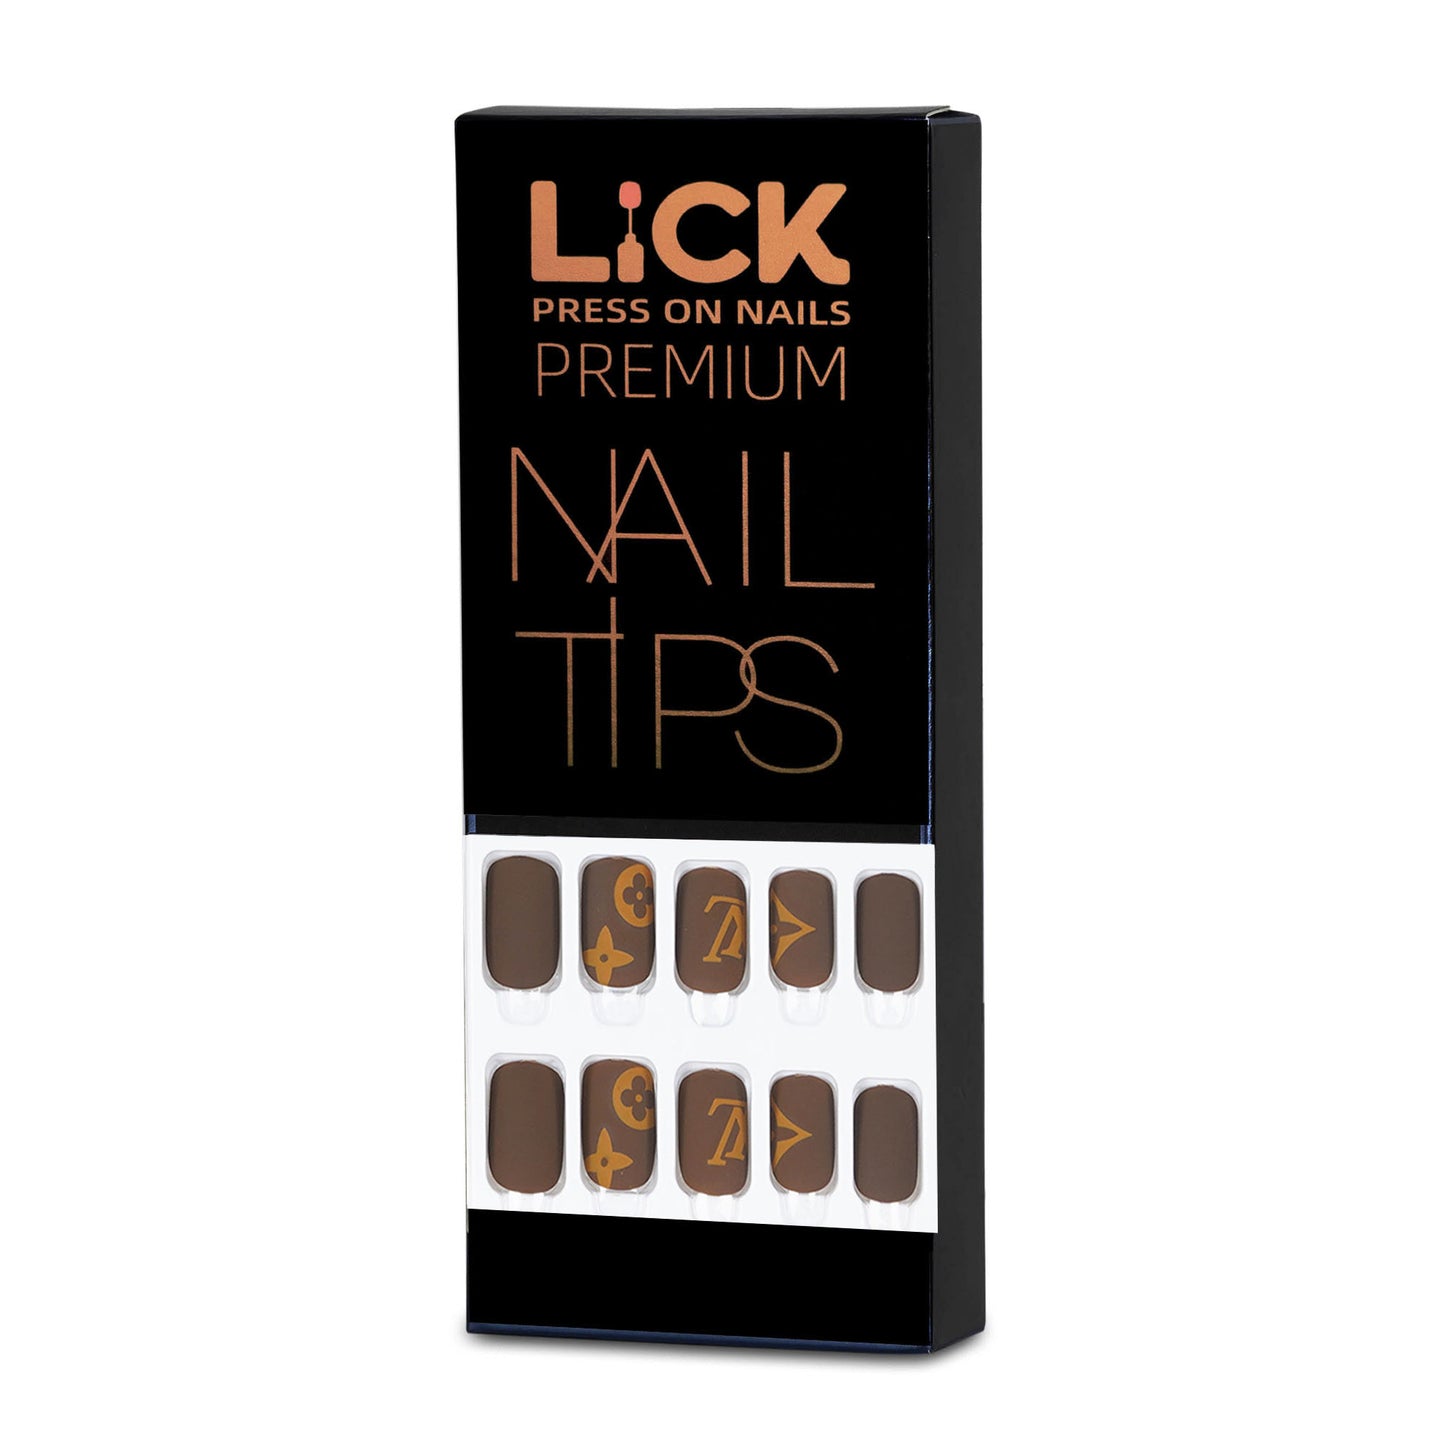 LICK NAILS Nude With Check Print Press on Nails